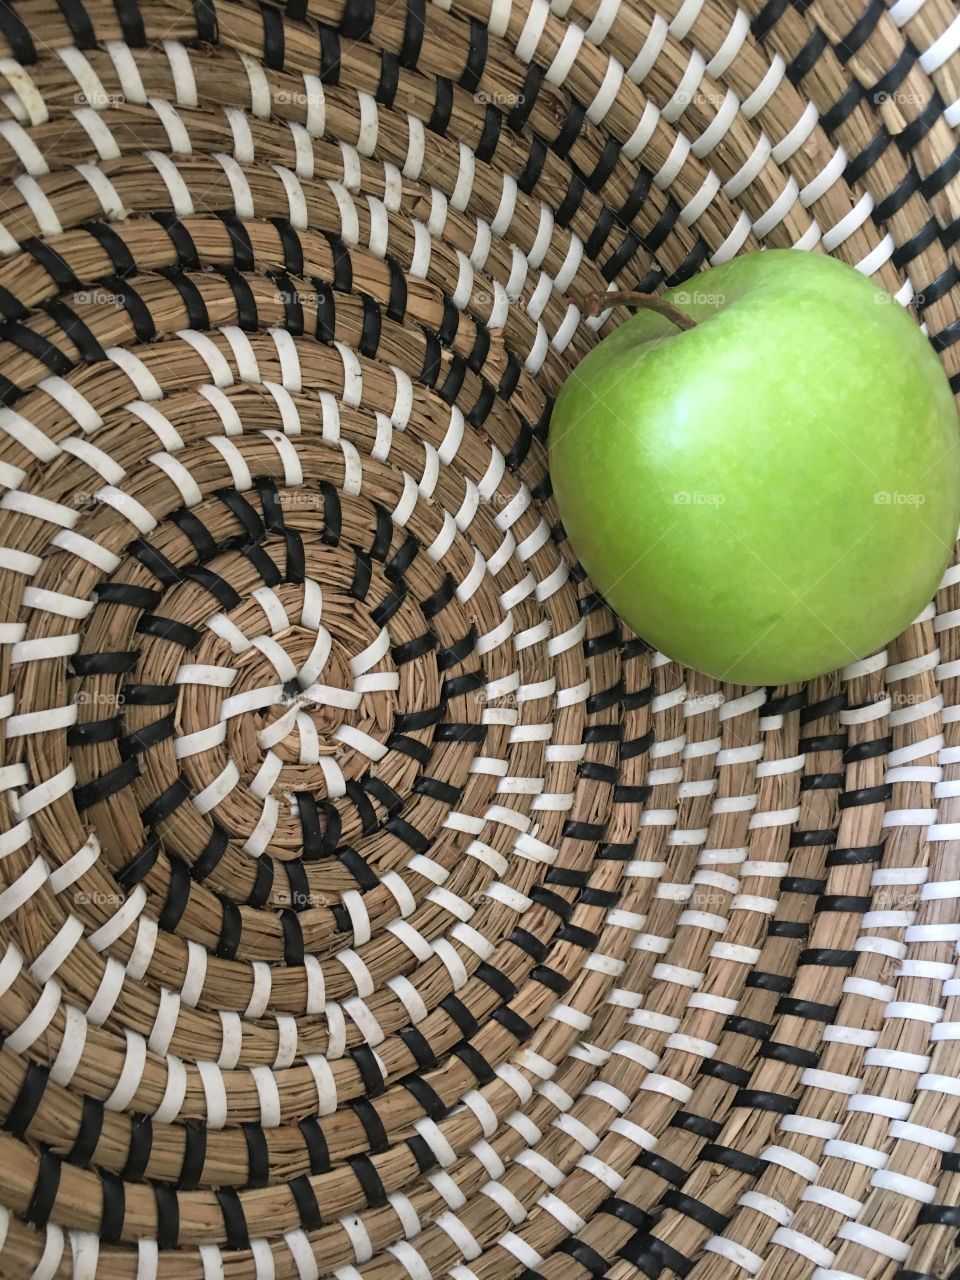 Fruit basket with a green apple inside